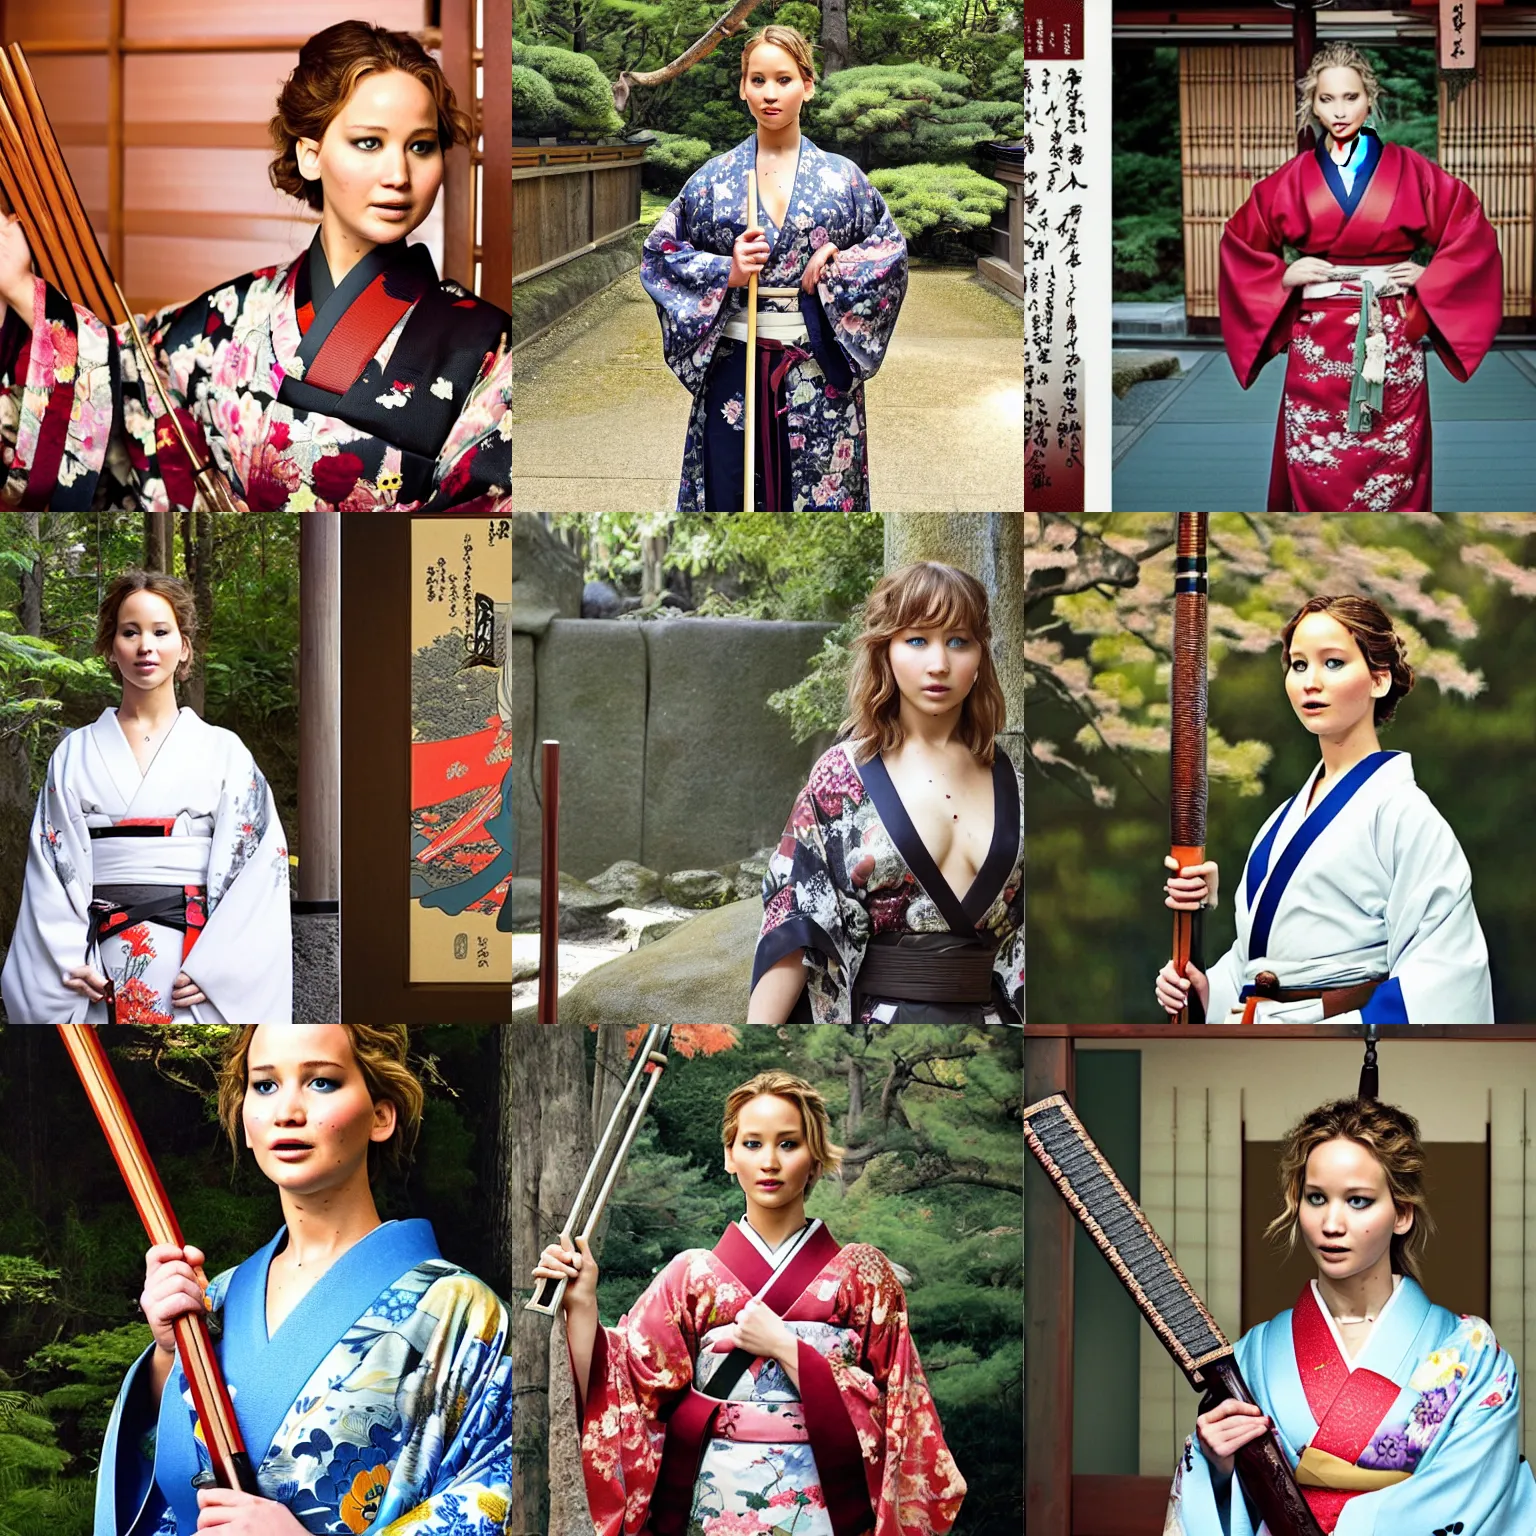 Prompt: Jennifer Lawrence wearing a kimono, holding a katana, in a Japanese shrine, portrait photo